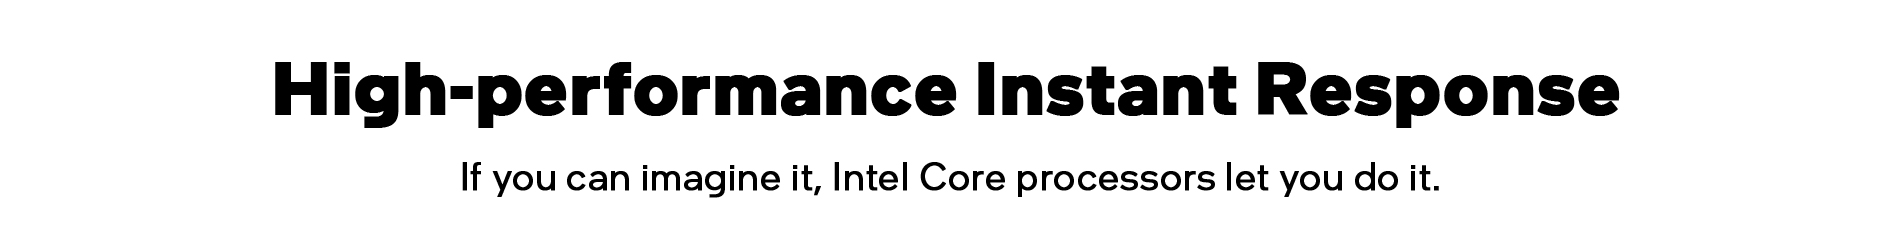 Intel Processors 9th Gen General Sale Landing Page  Tile 02